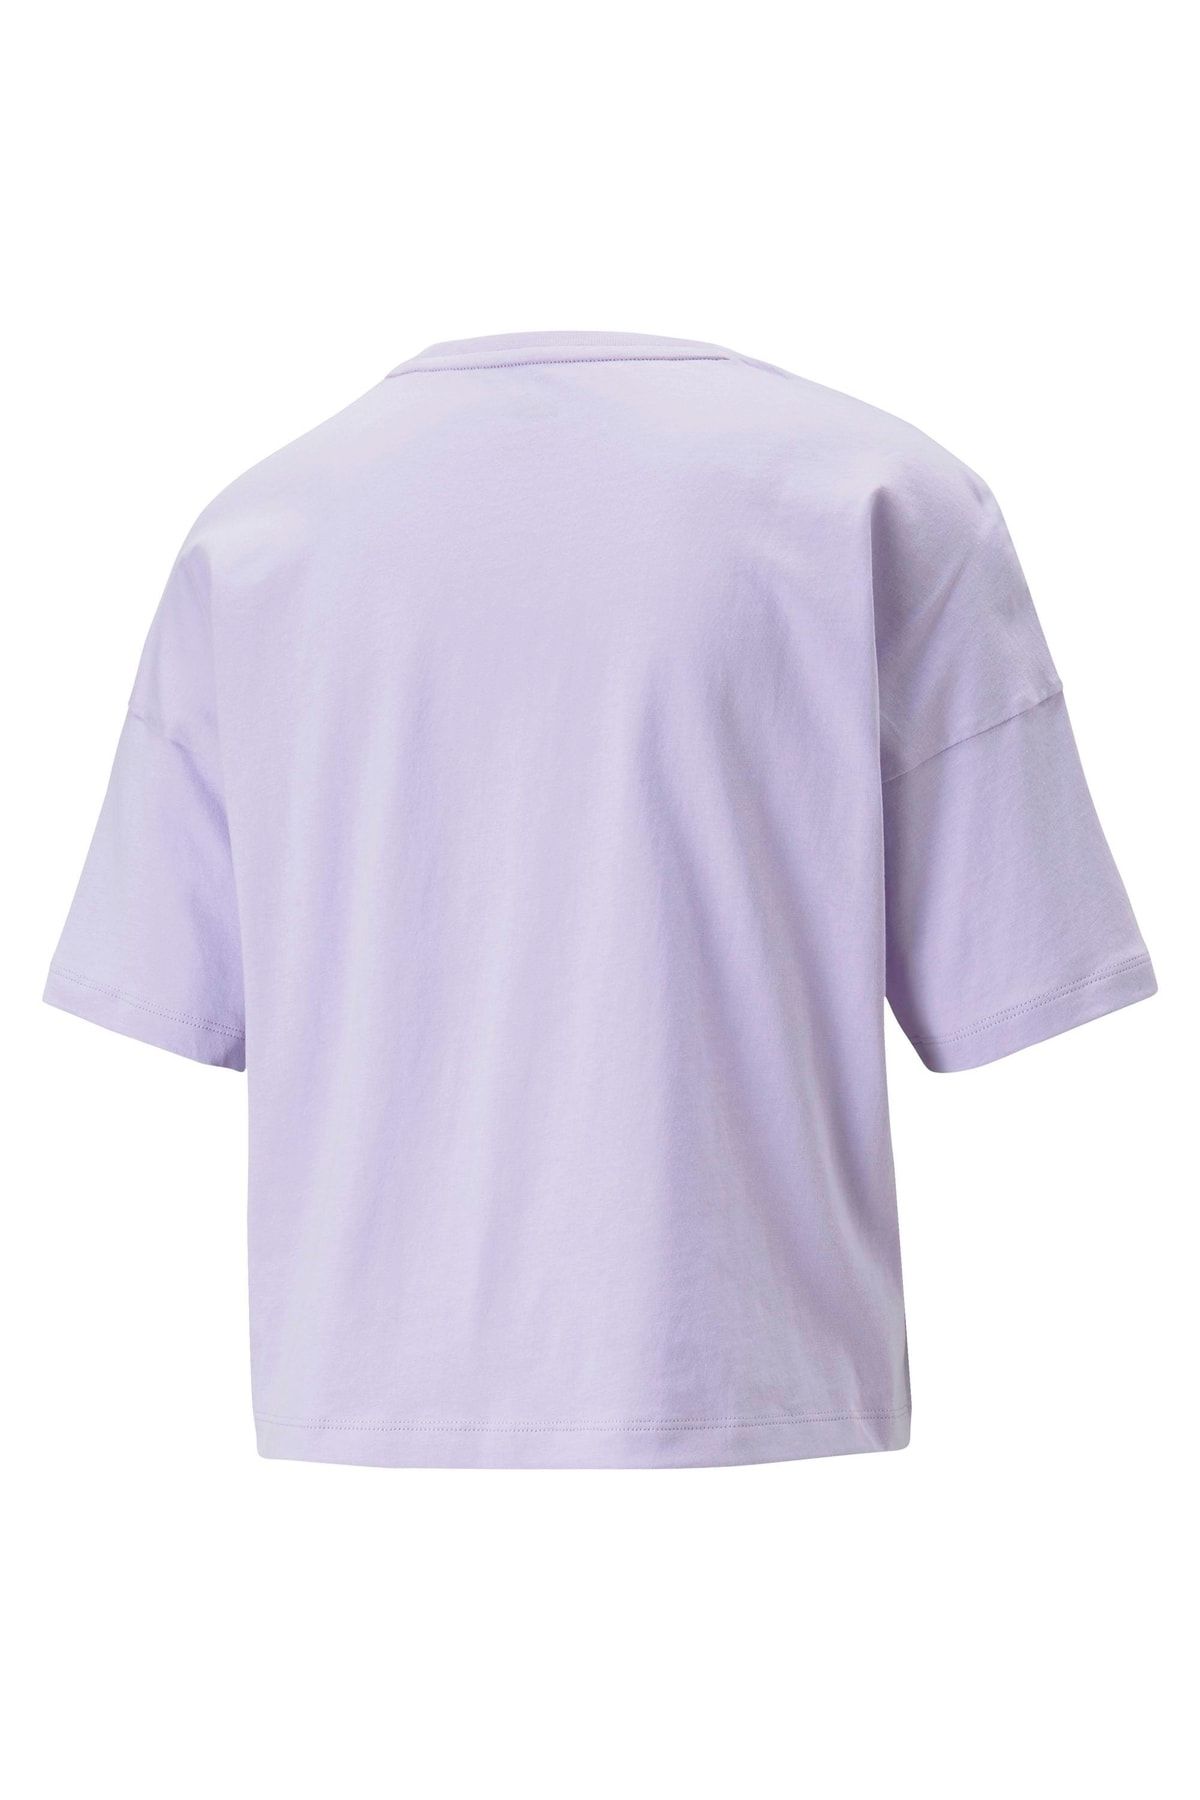 Puma Logo Cropped Trendyol Tee - Ess T-shirt Women\'s Sleeve Short Lilac